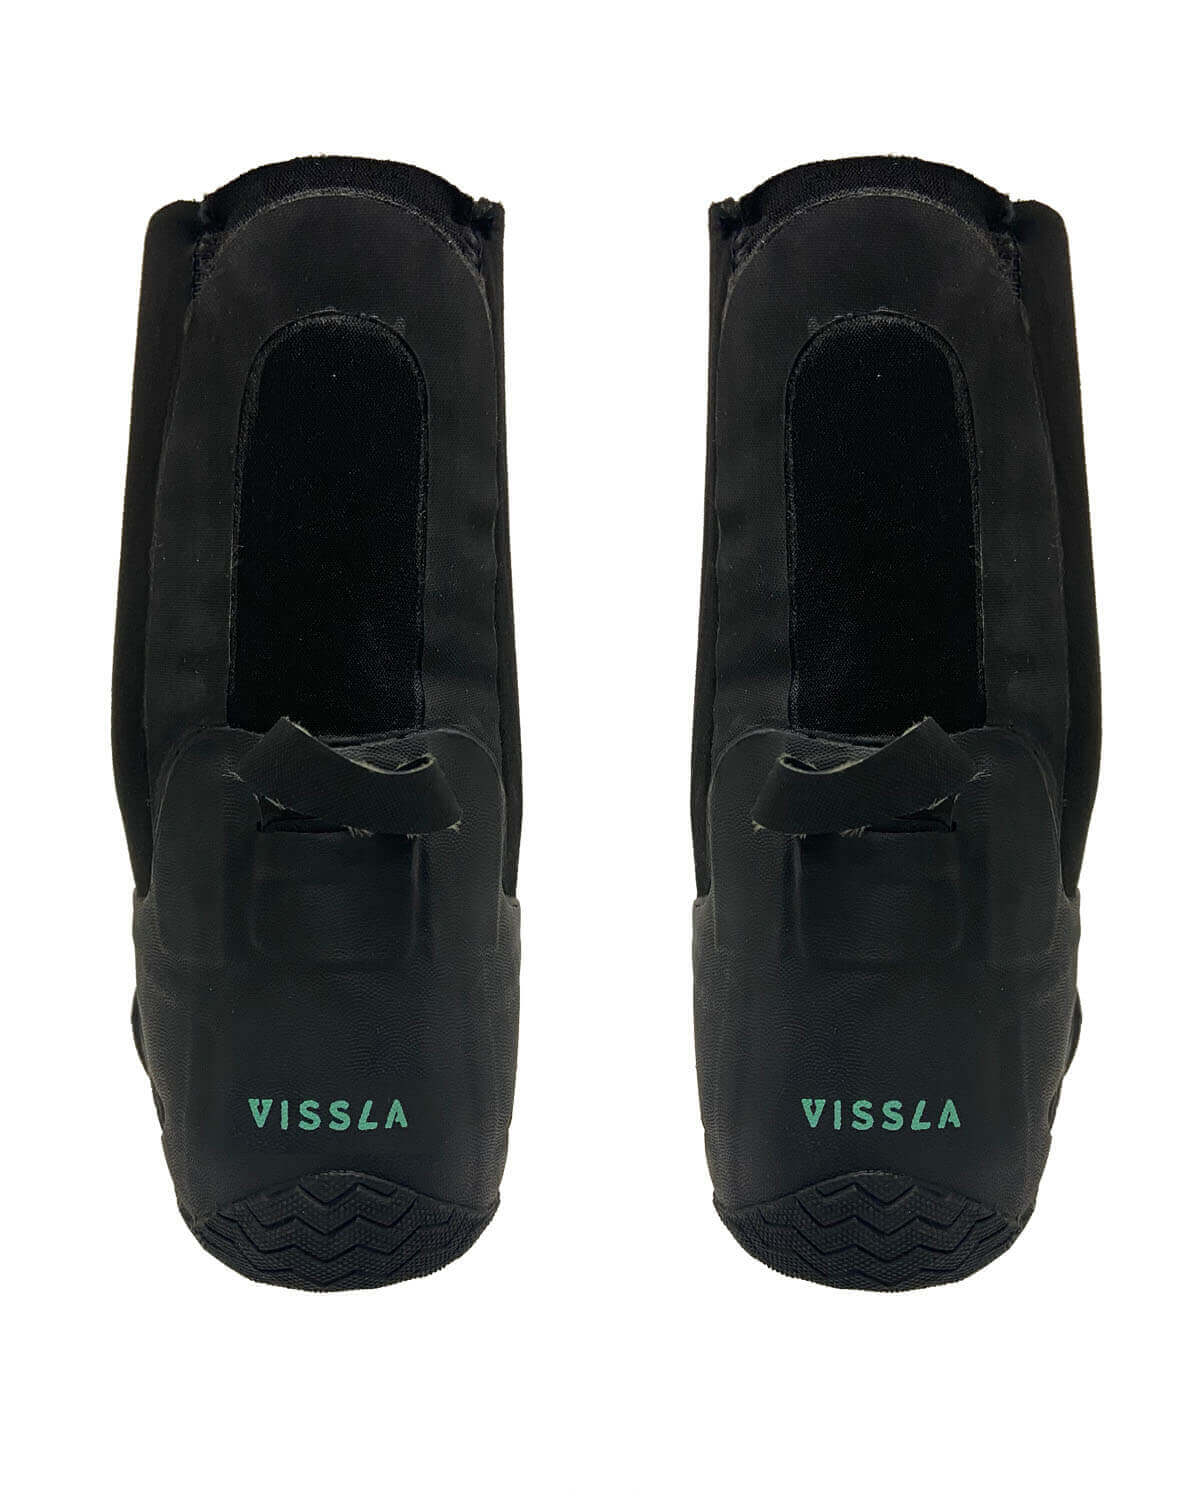 5mm Vissla 7 SEAS Round Toe Wetsuit Boots